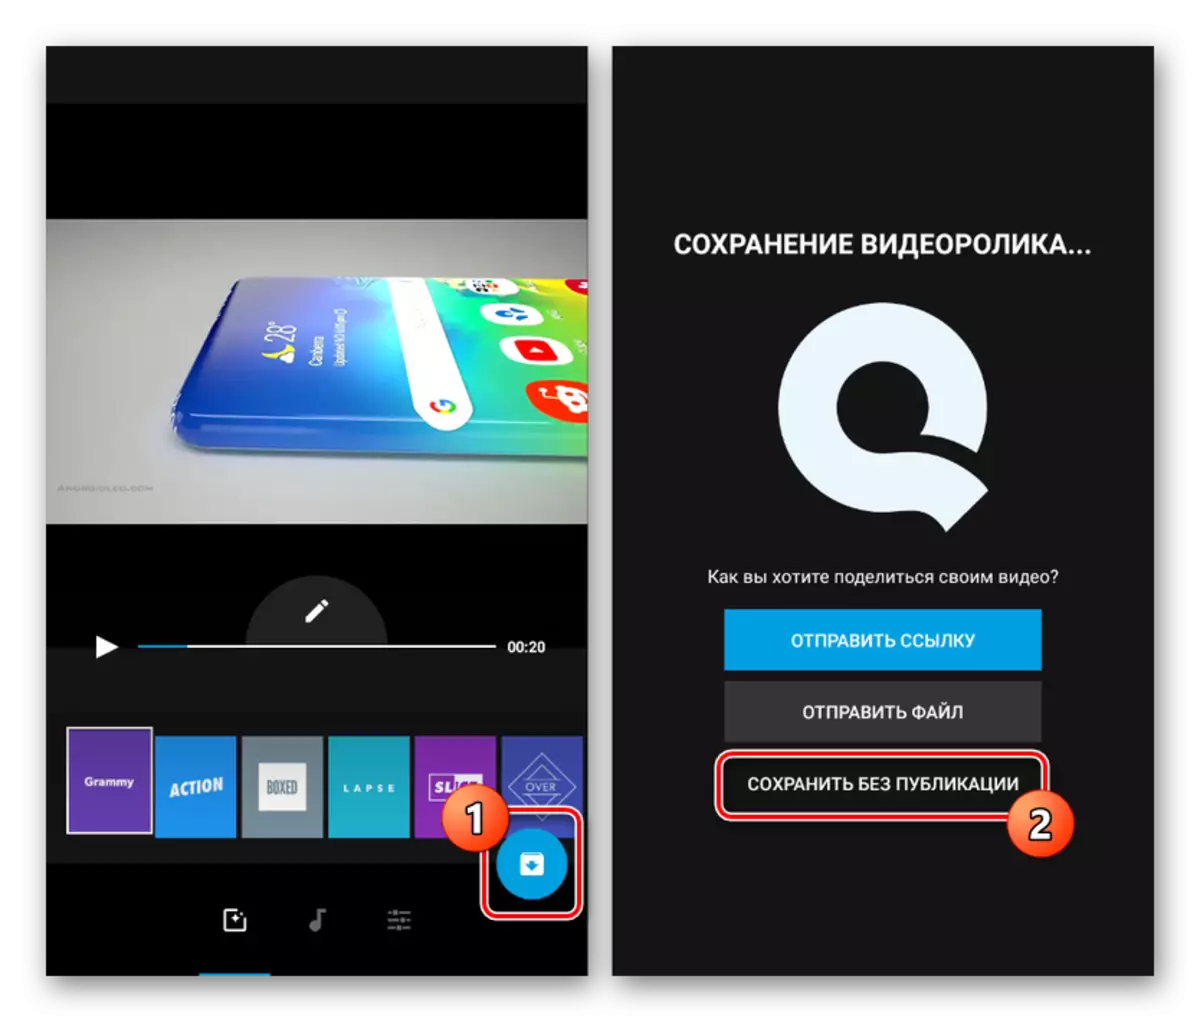 Inzibacyuho kugirango uzigame kuri Quik Video Video kuri Android